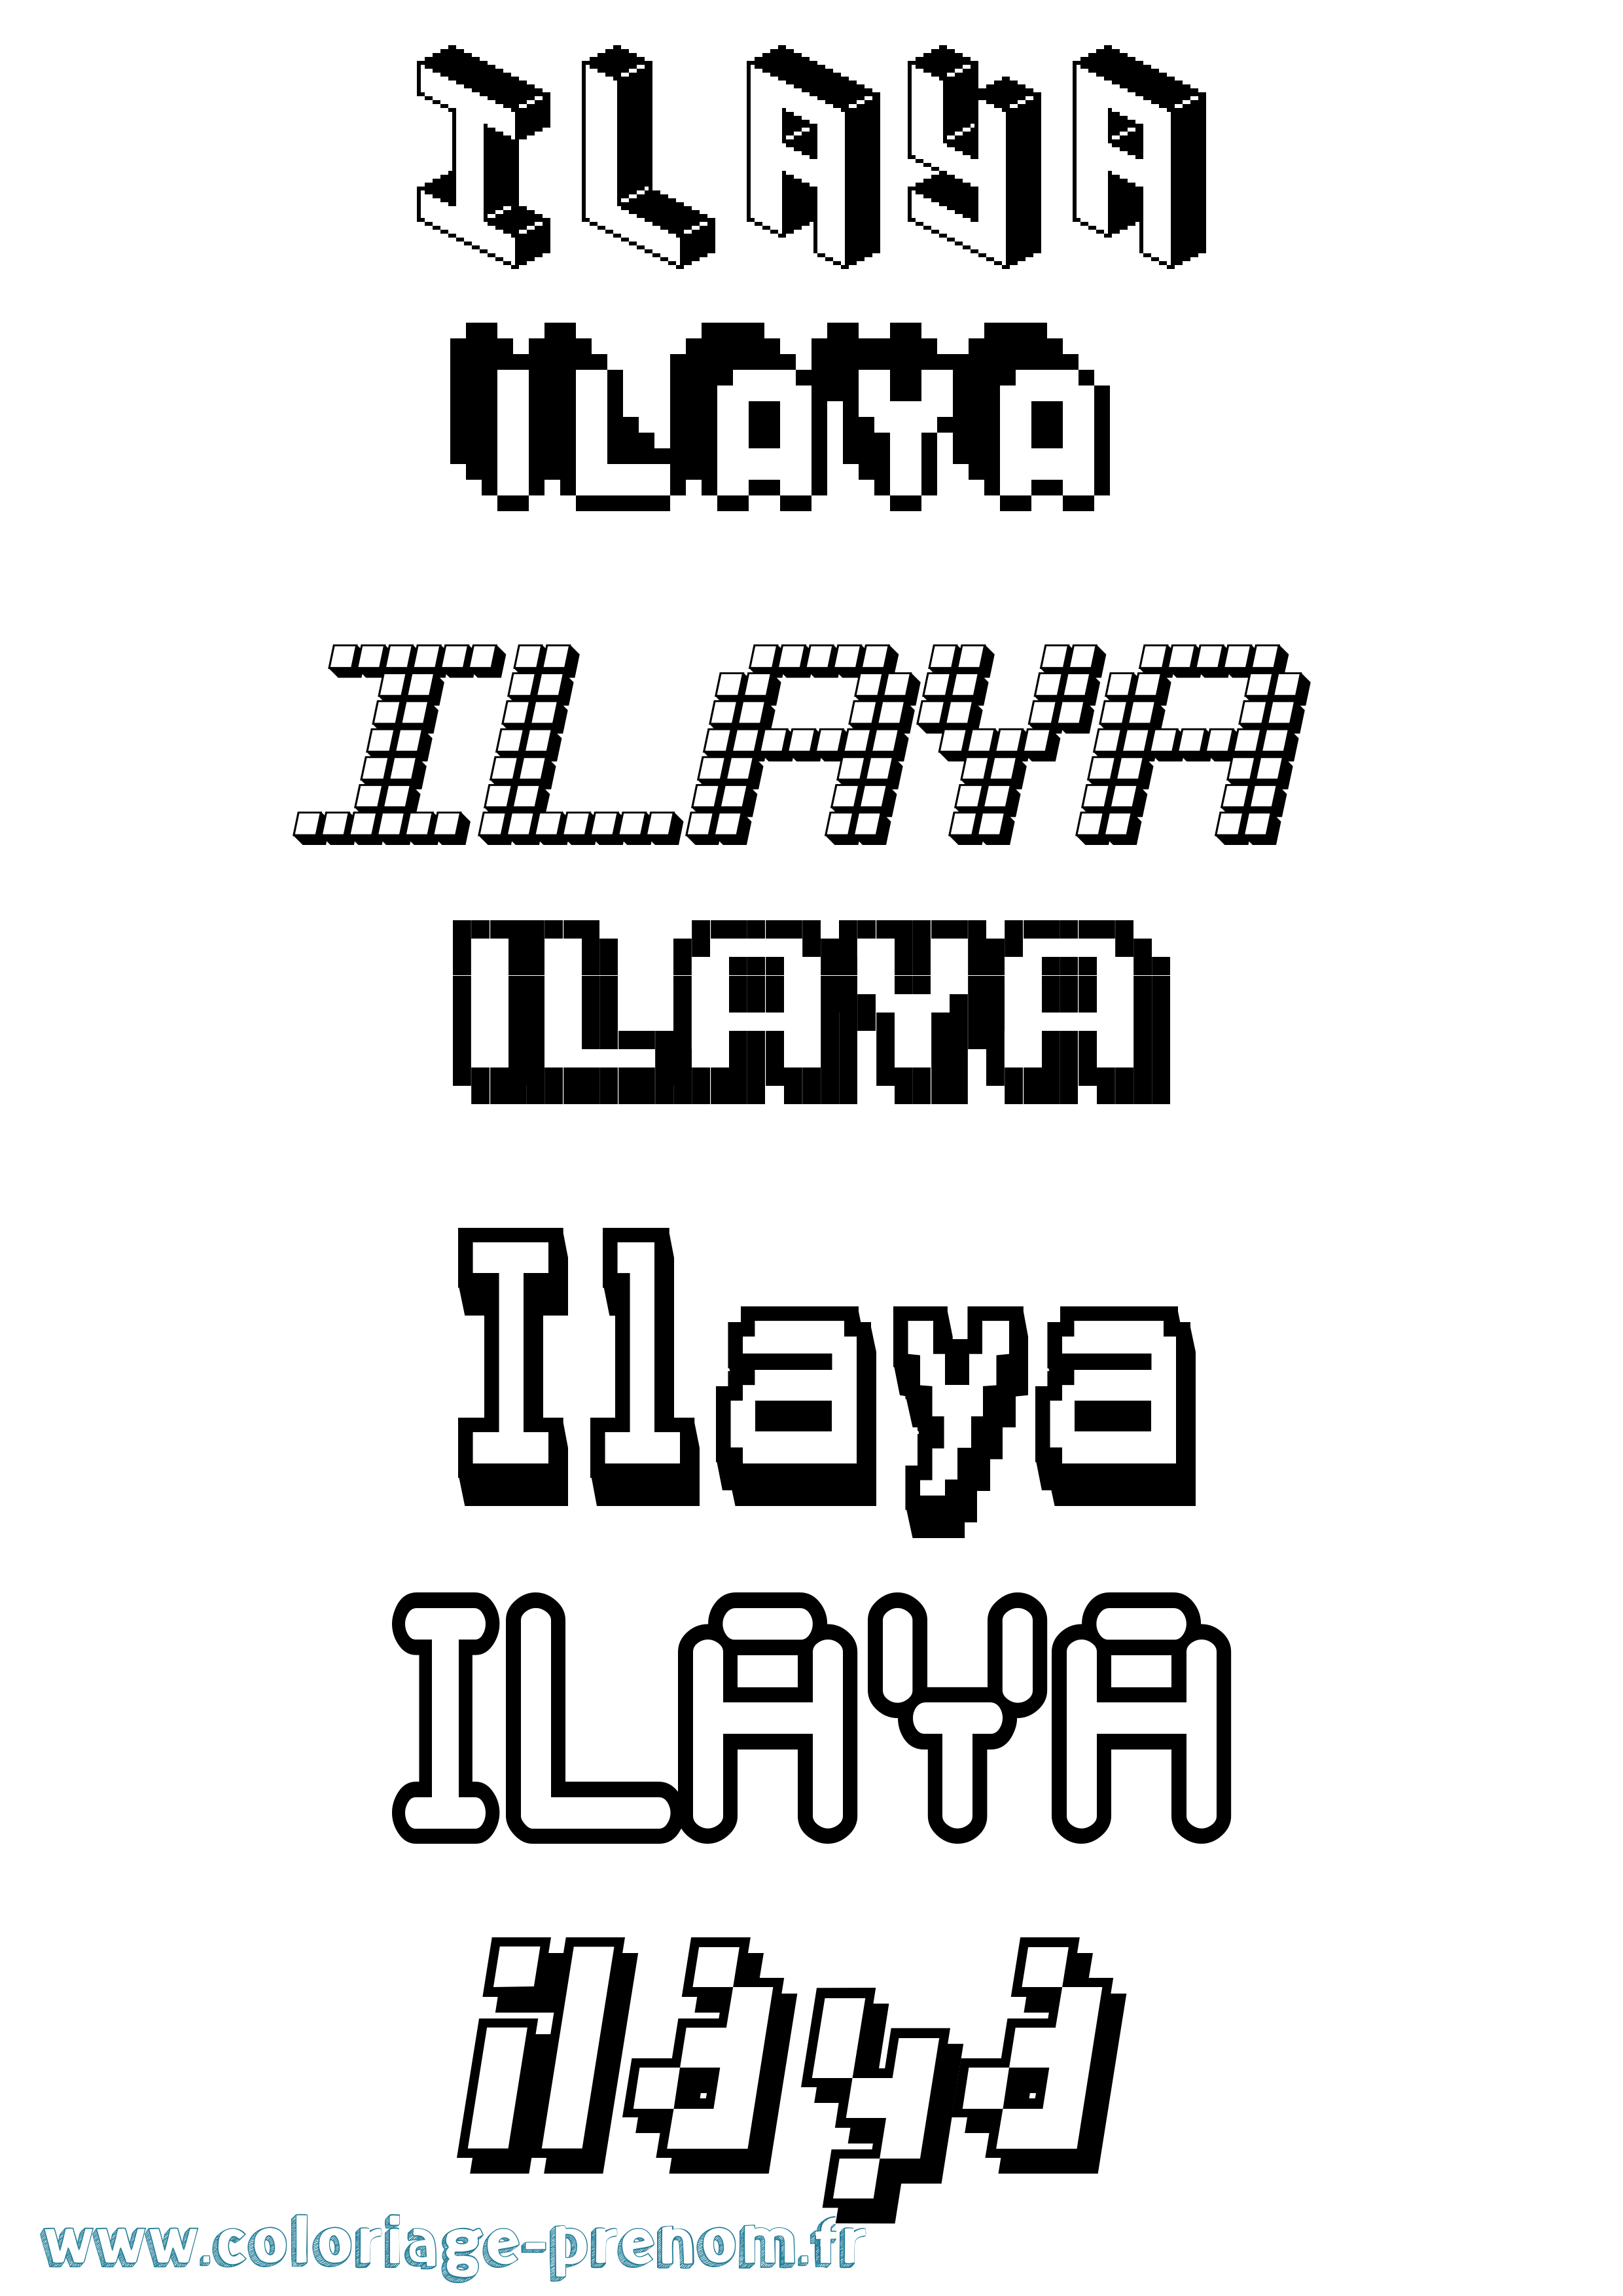 Coloriage prénom Ilaya Pixel